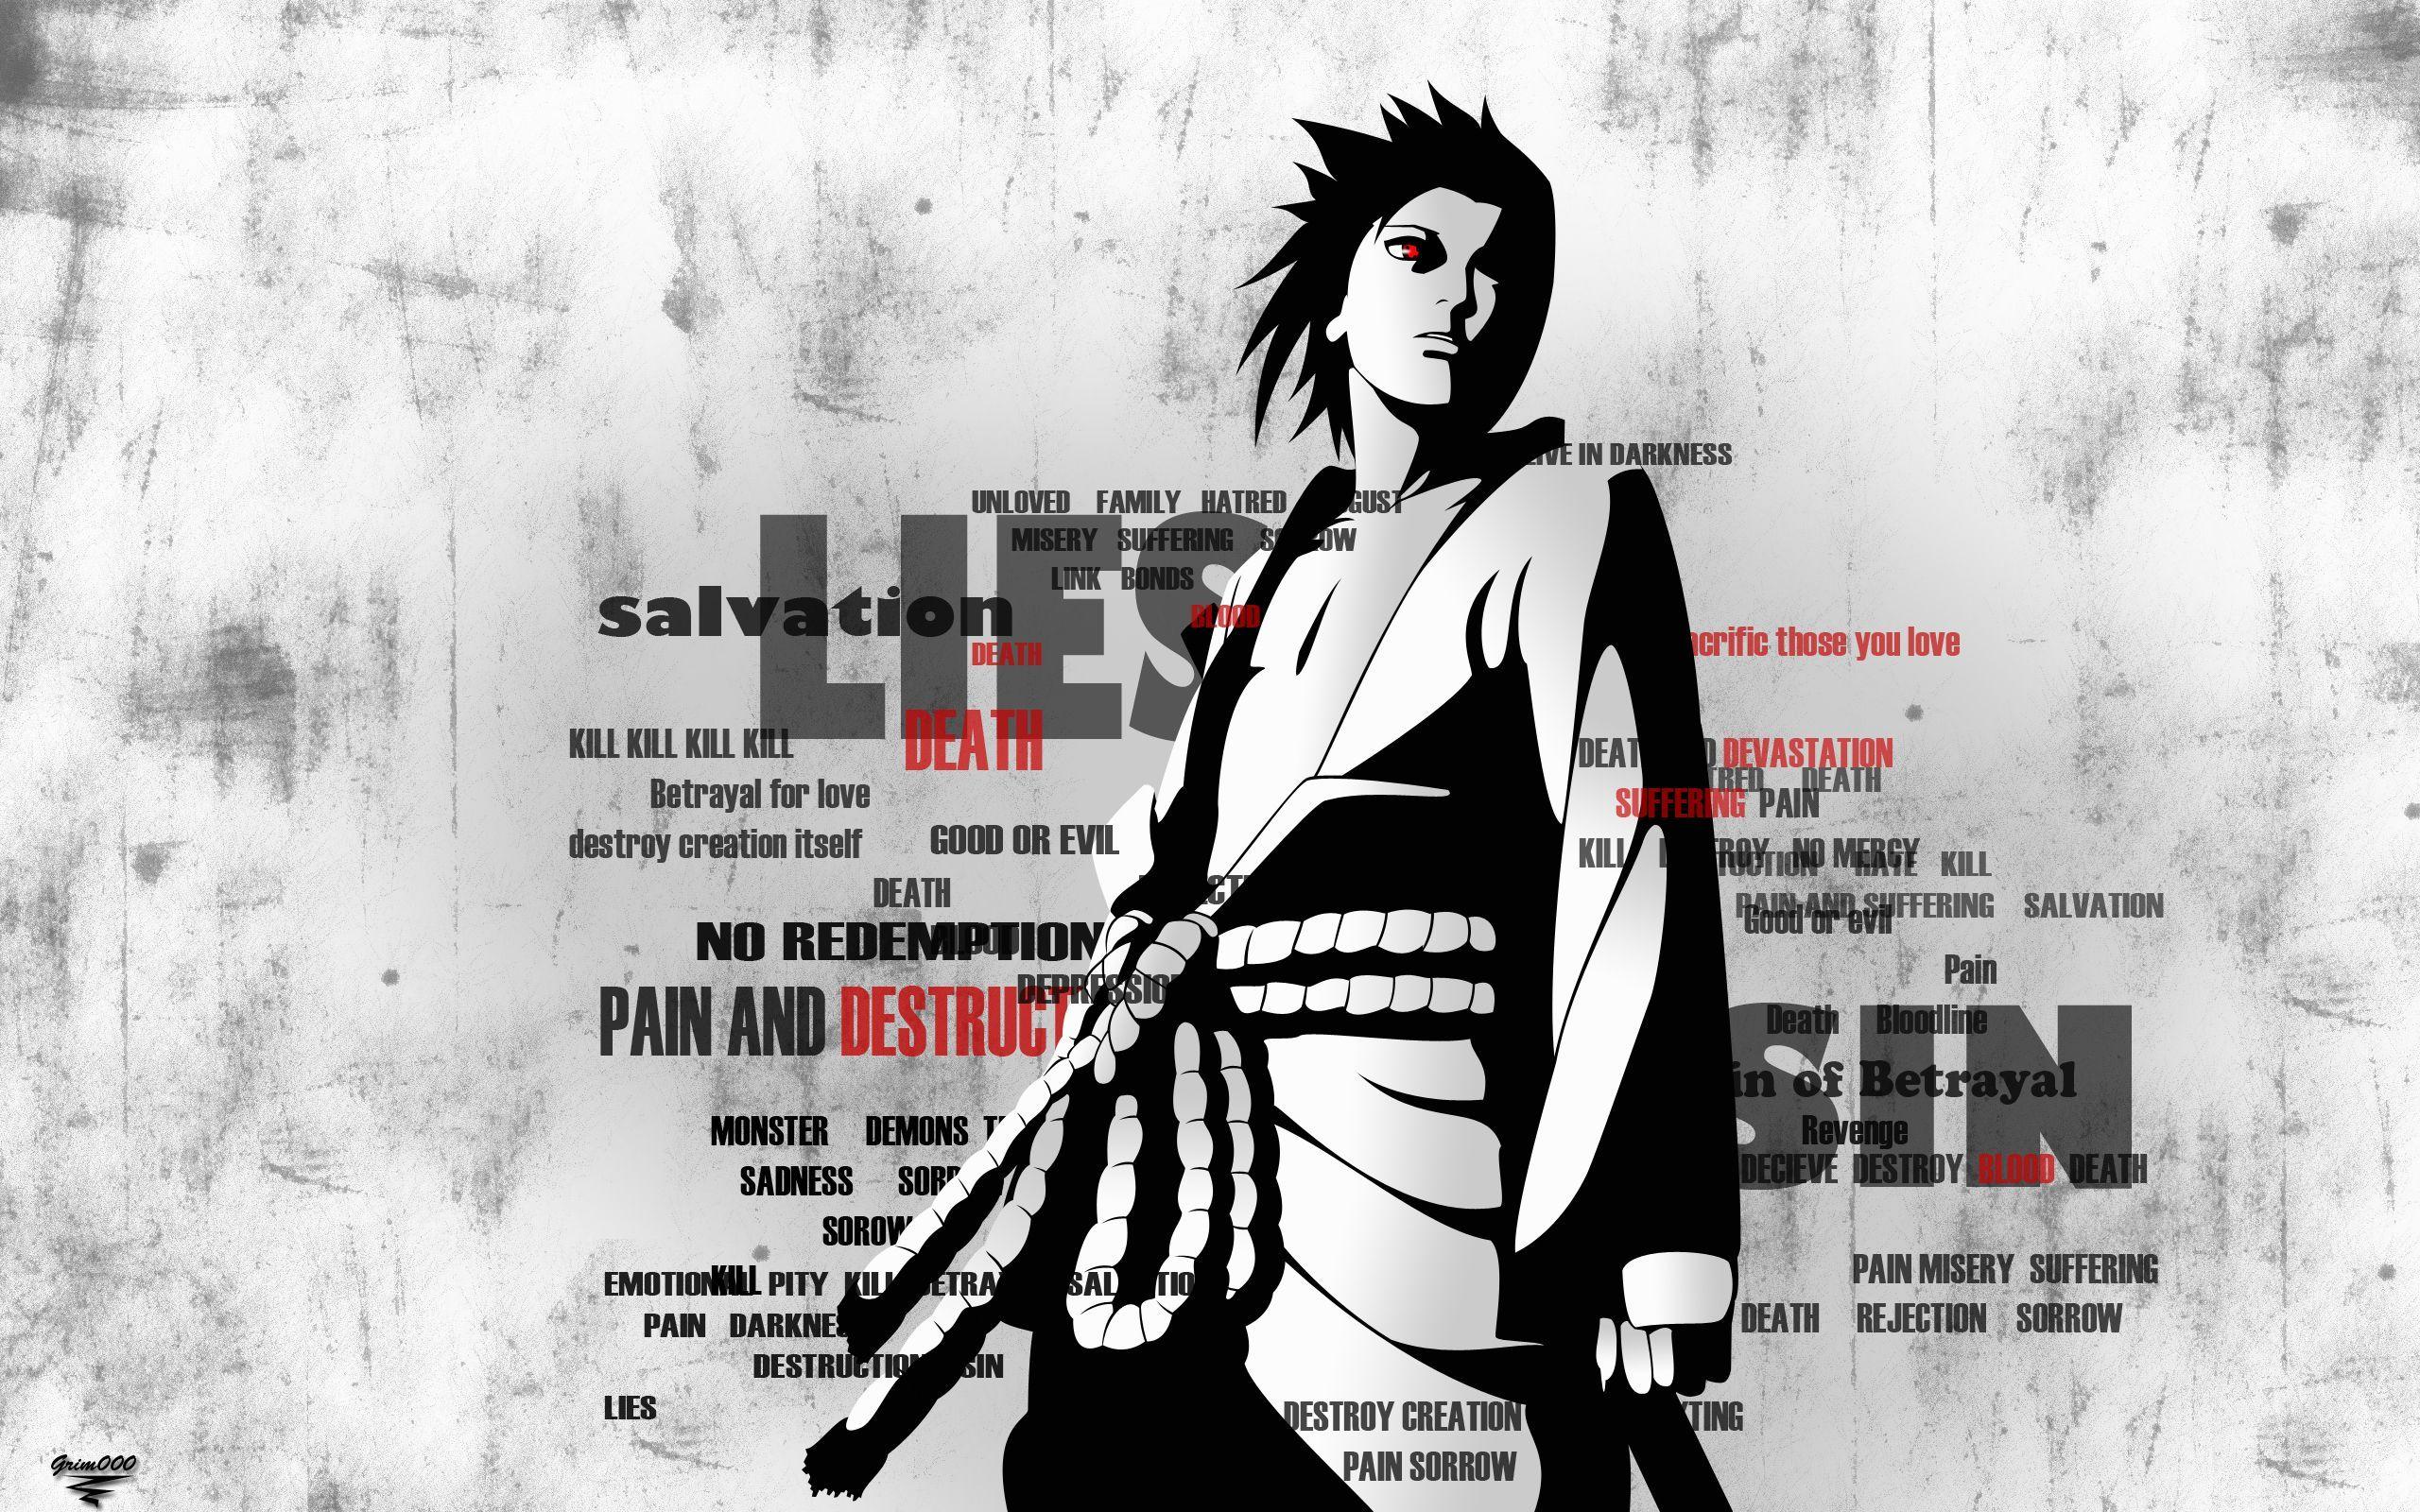 Sasuke Wallpaper HD. Wallpaper, Background, Image, Art Photo